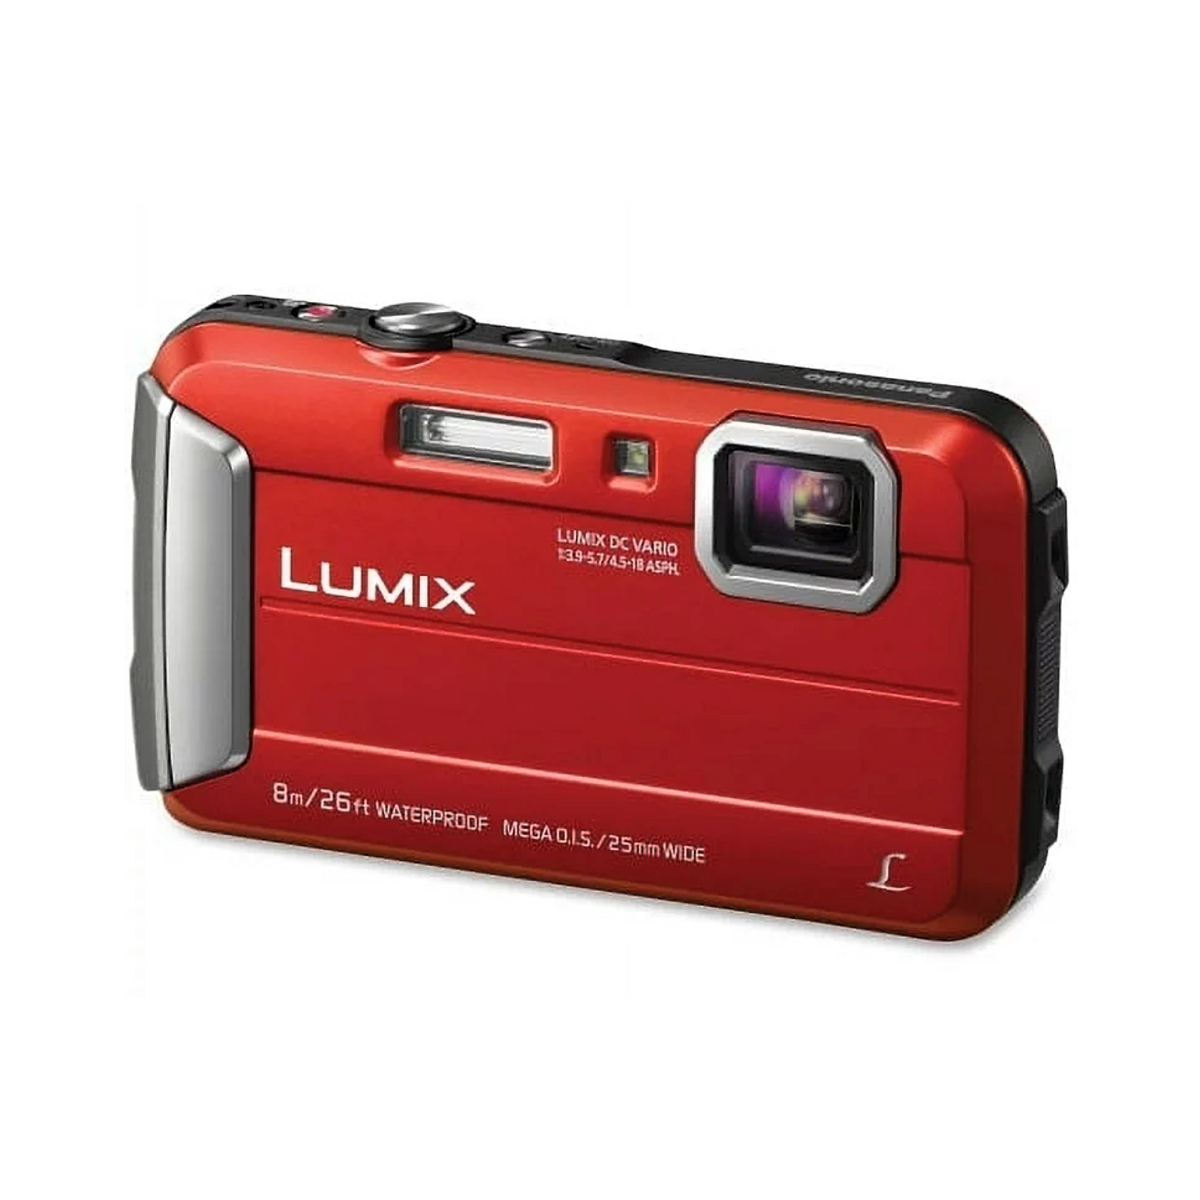 A Panasonic Lumix DMC-TS30 camera